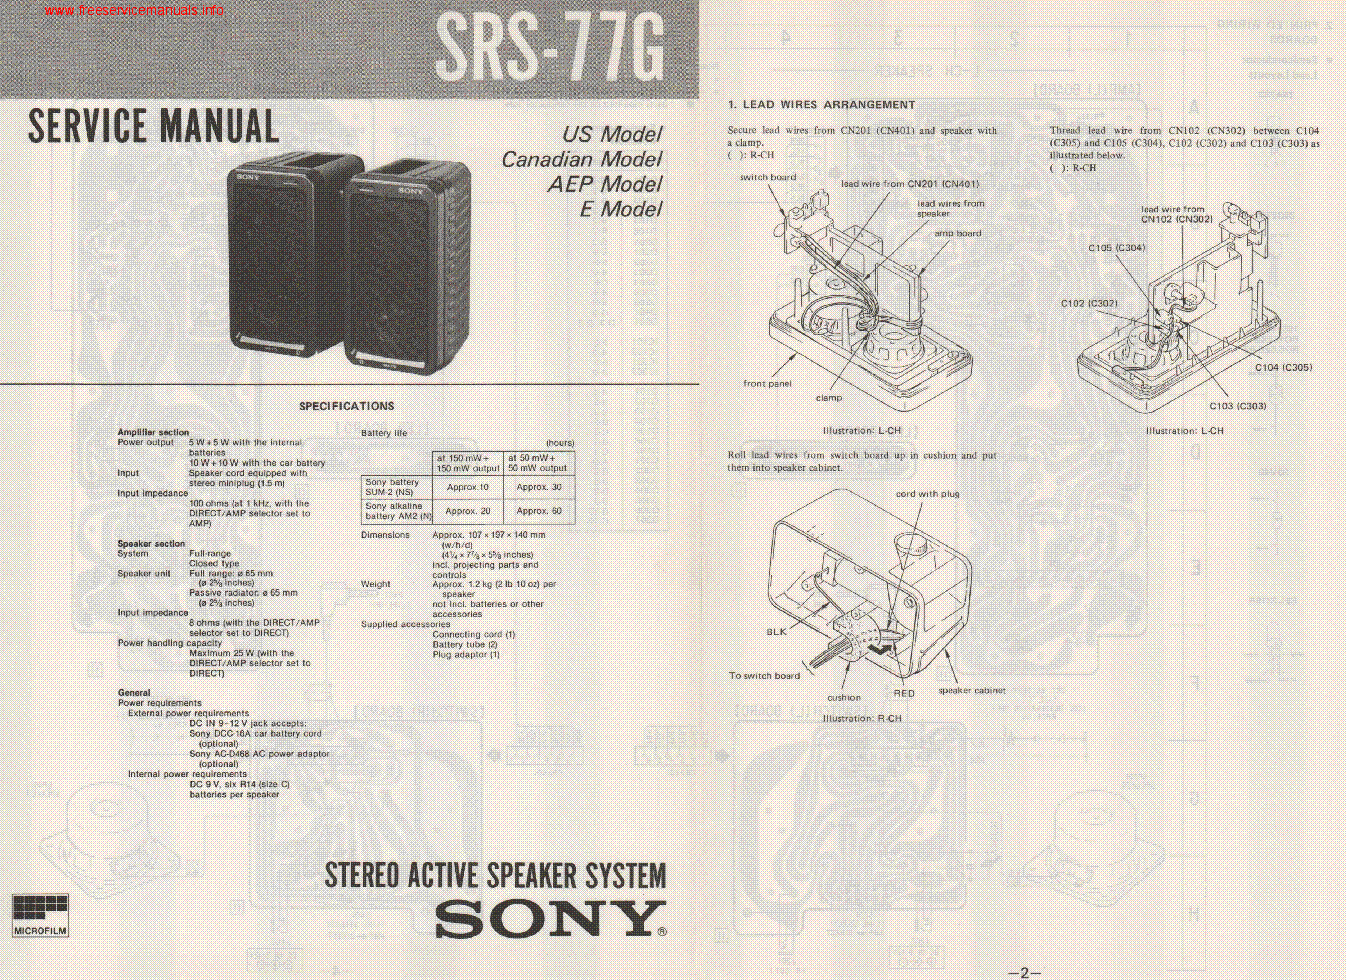 SONY SRS-77G service manual (1st page)